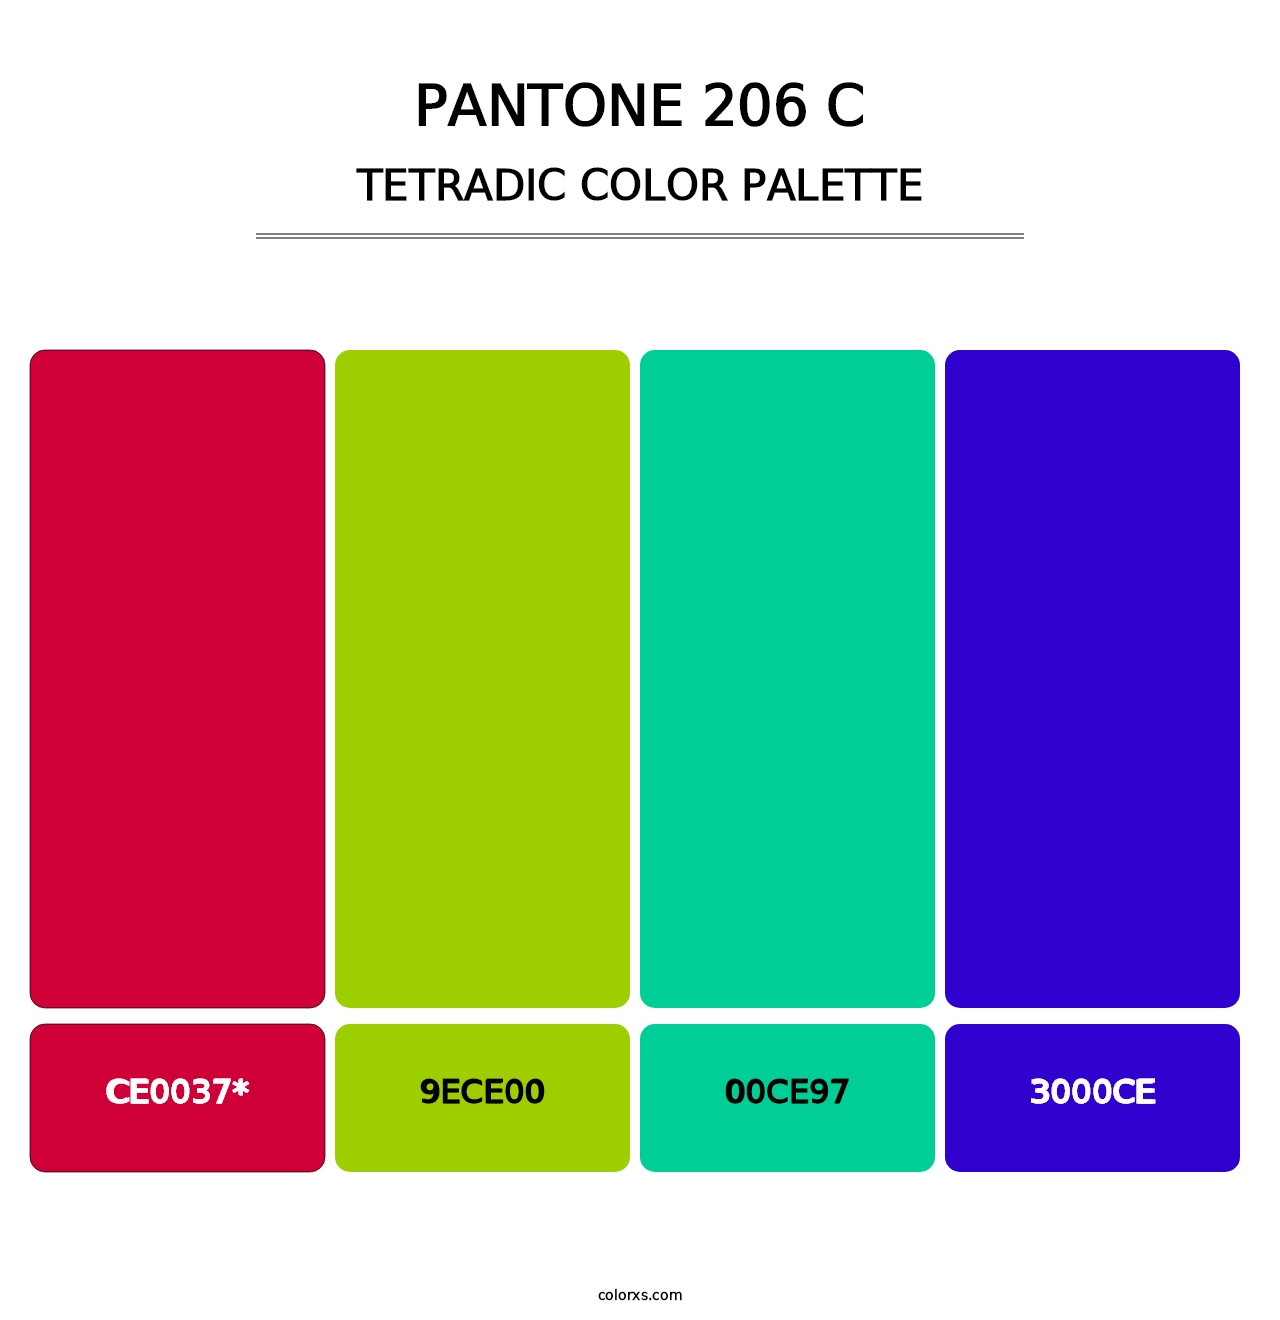 PANTONE 206 C - Tetradic Color Palette